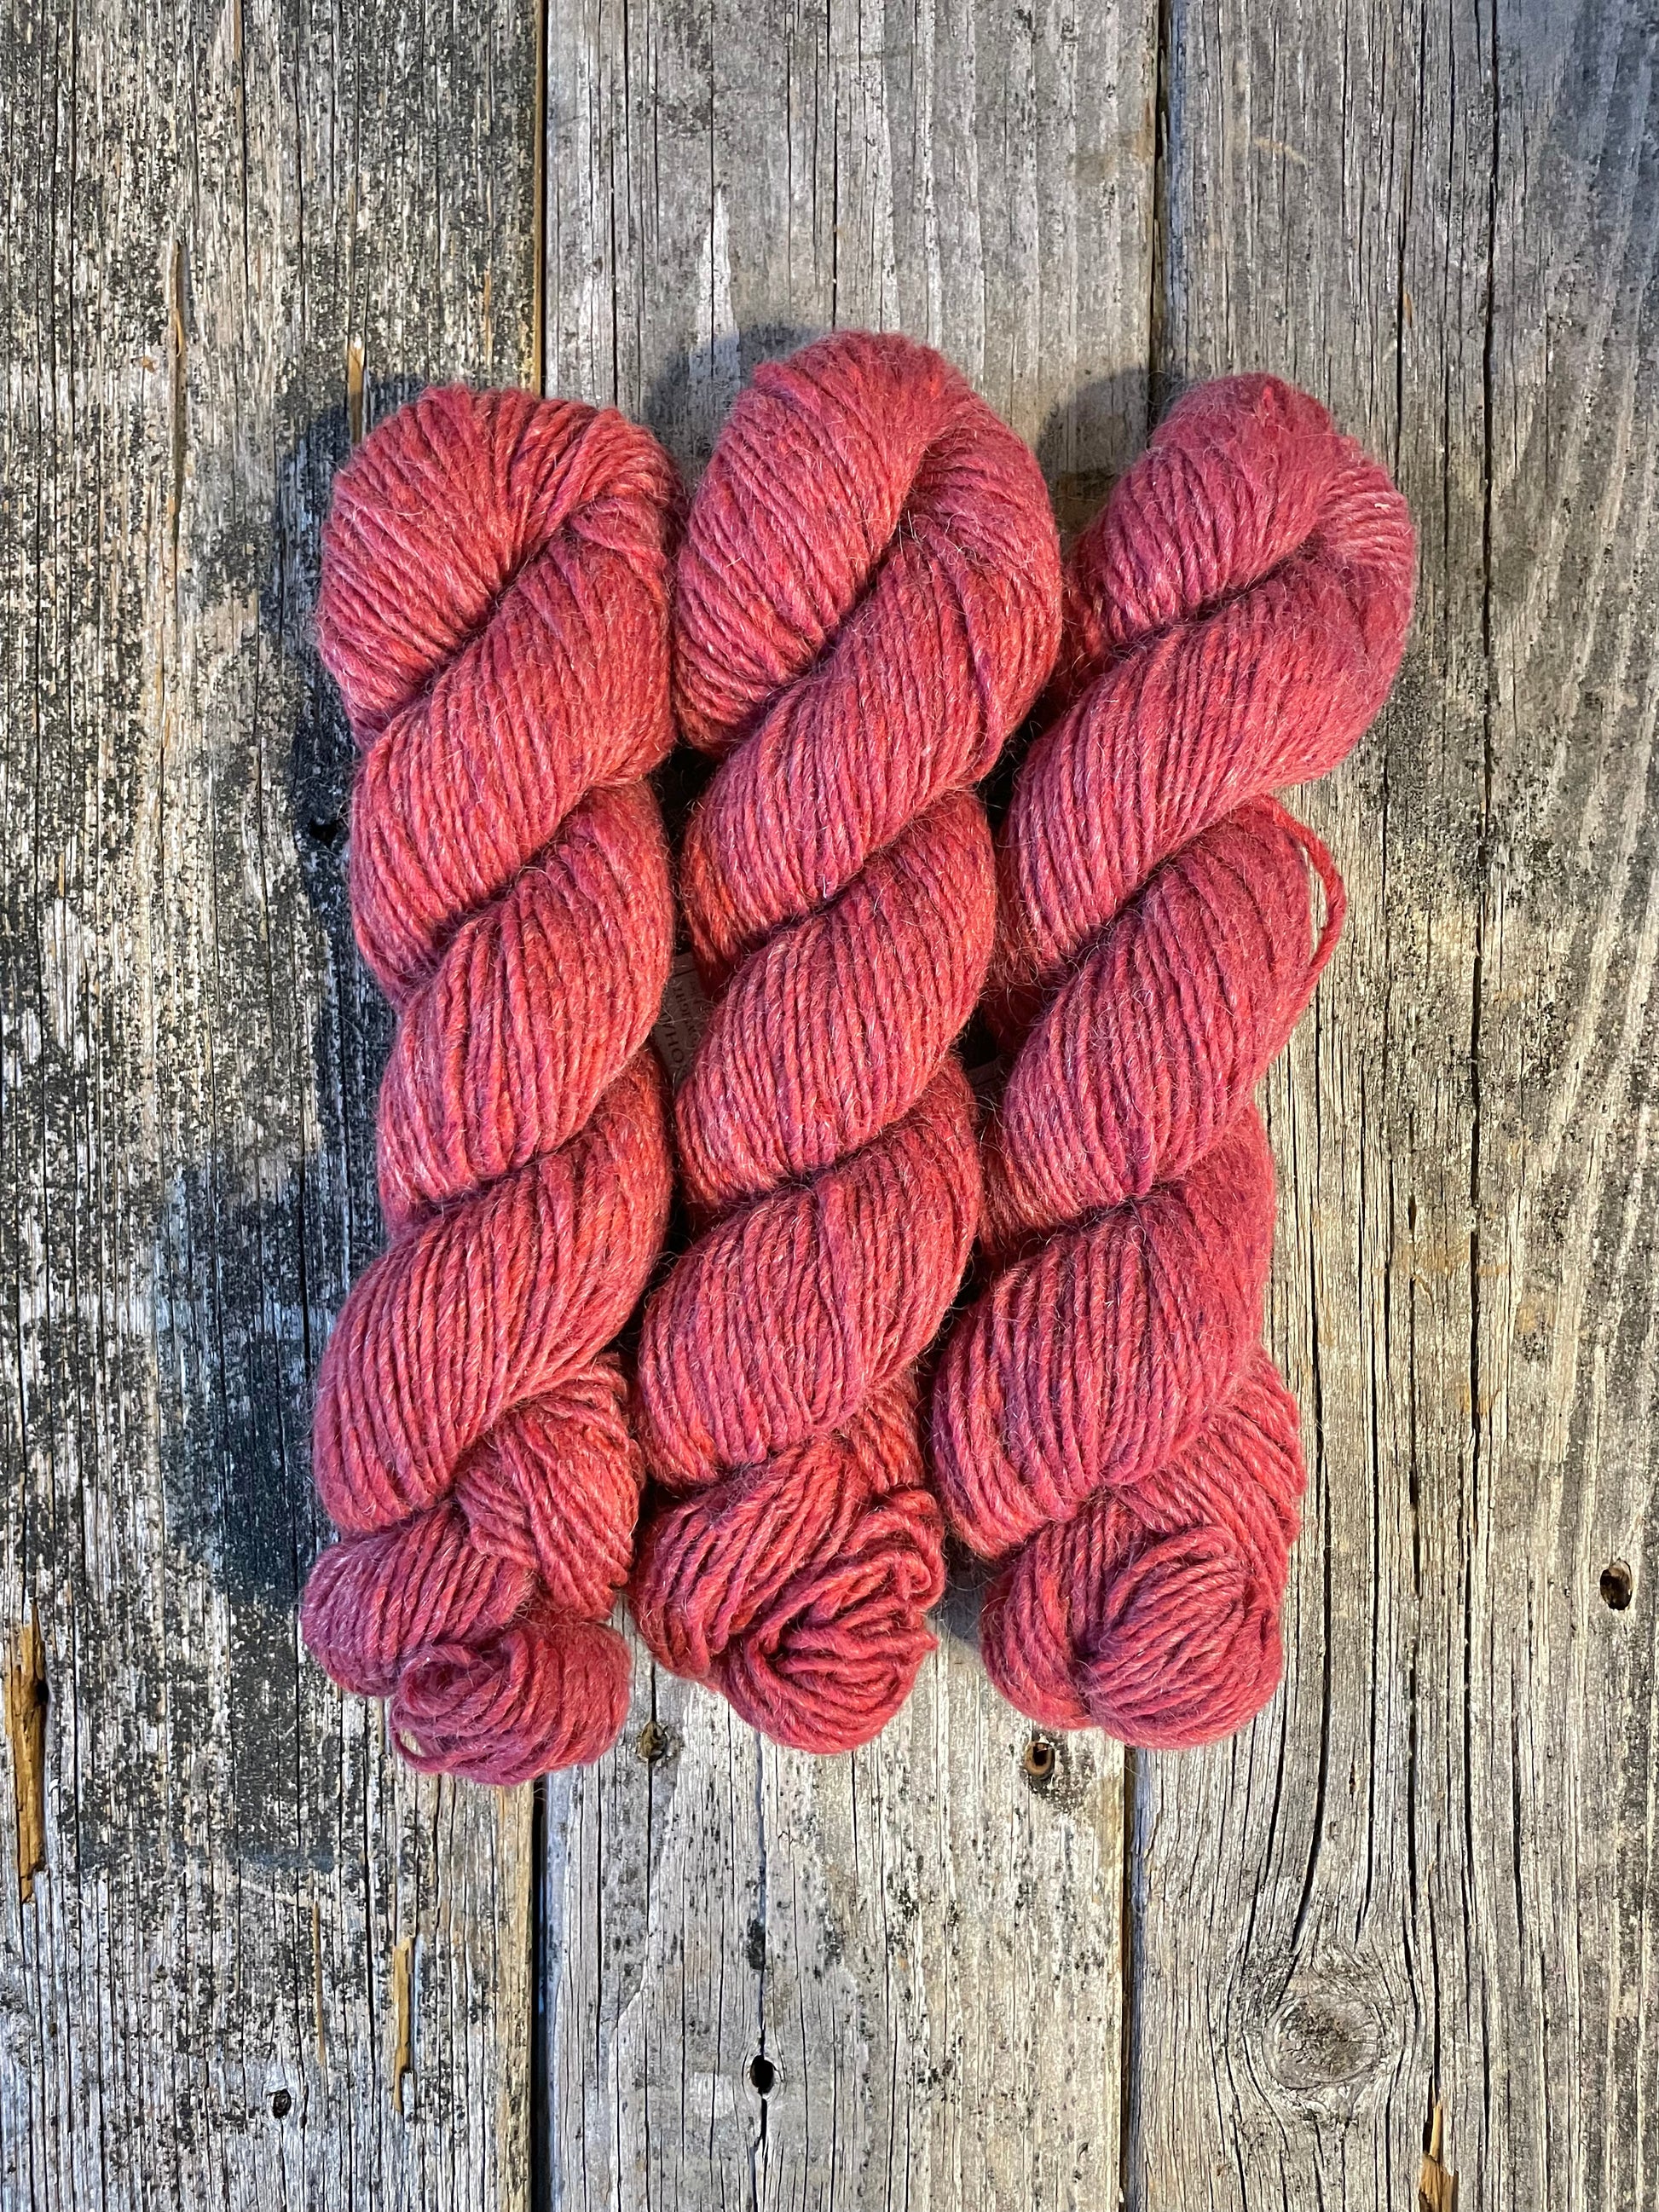 Mountain Mohair by Green Mountain Spinnery: Rhubarb - Maine Yarn & Fiber Supply